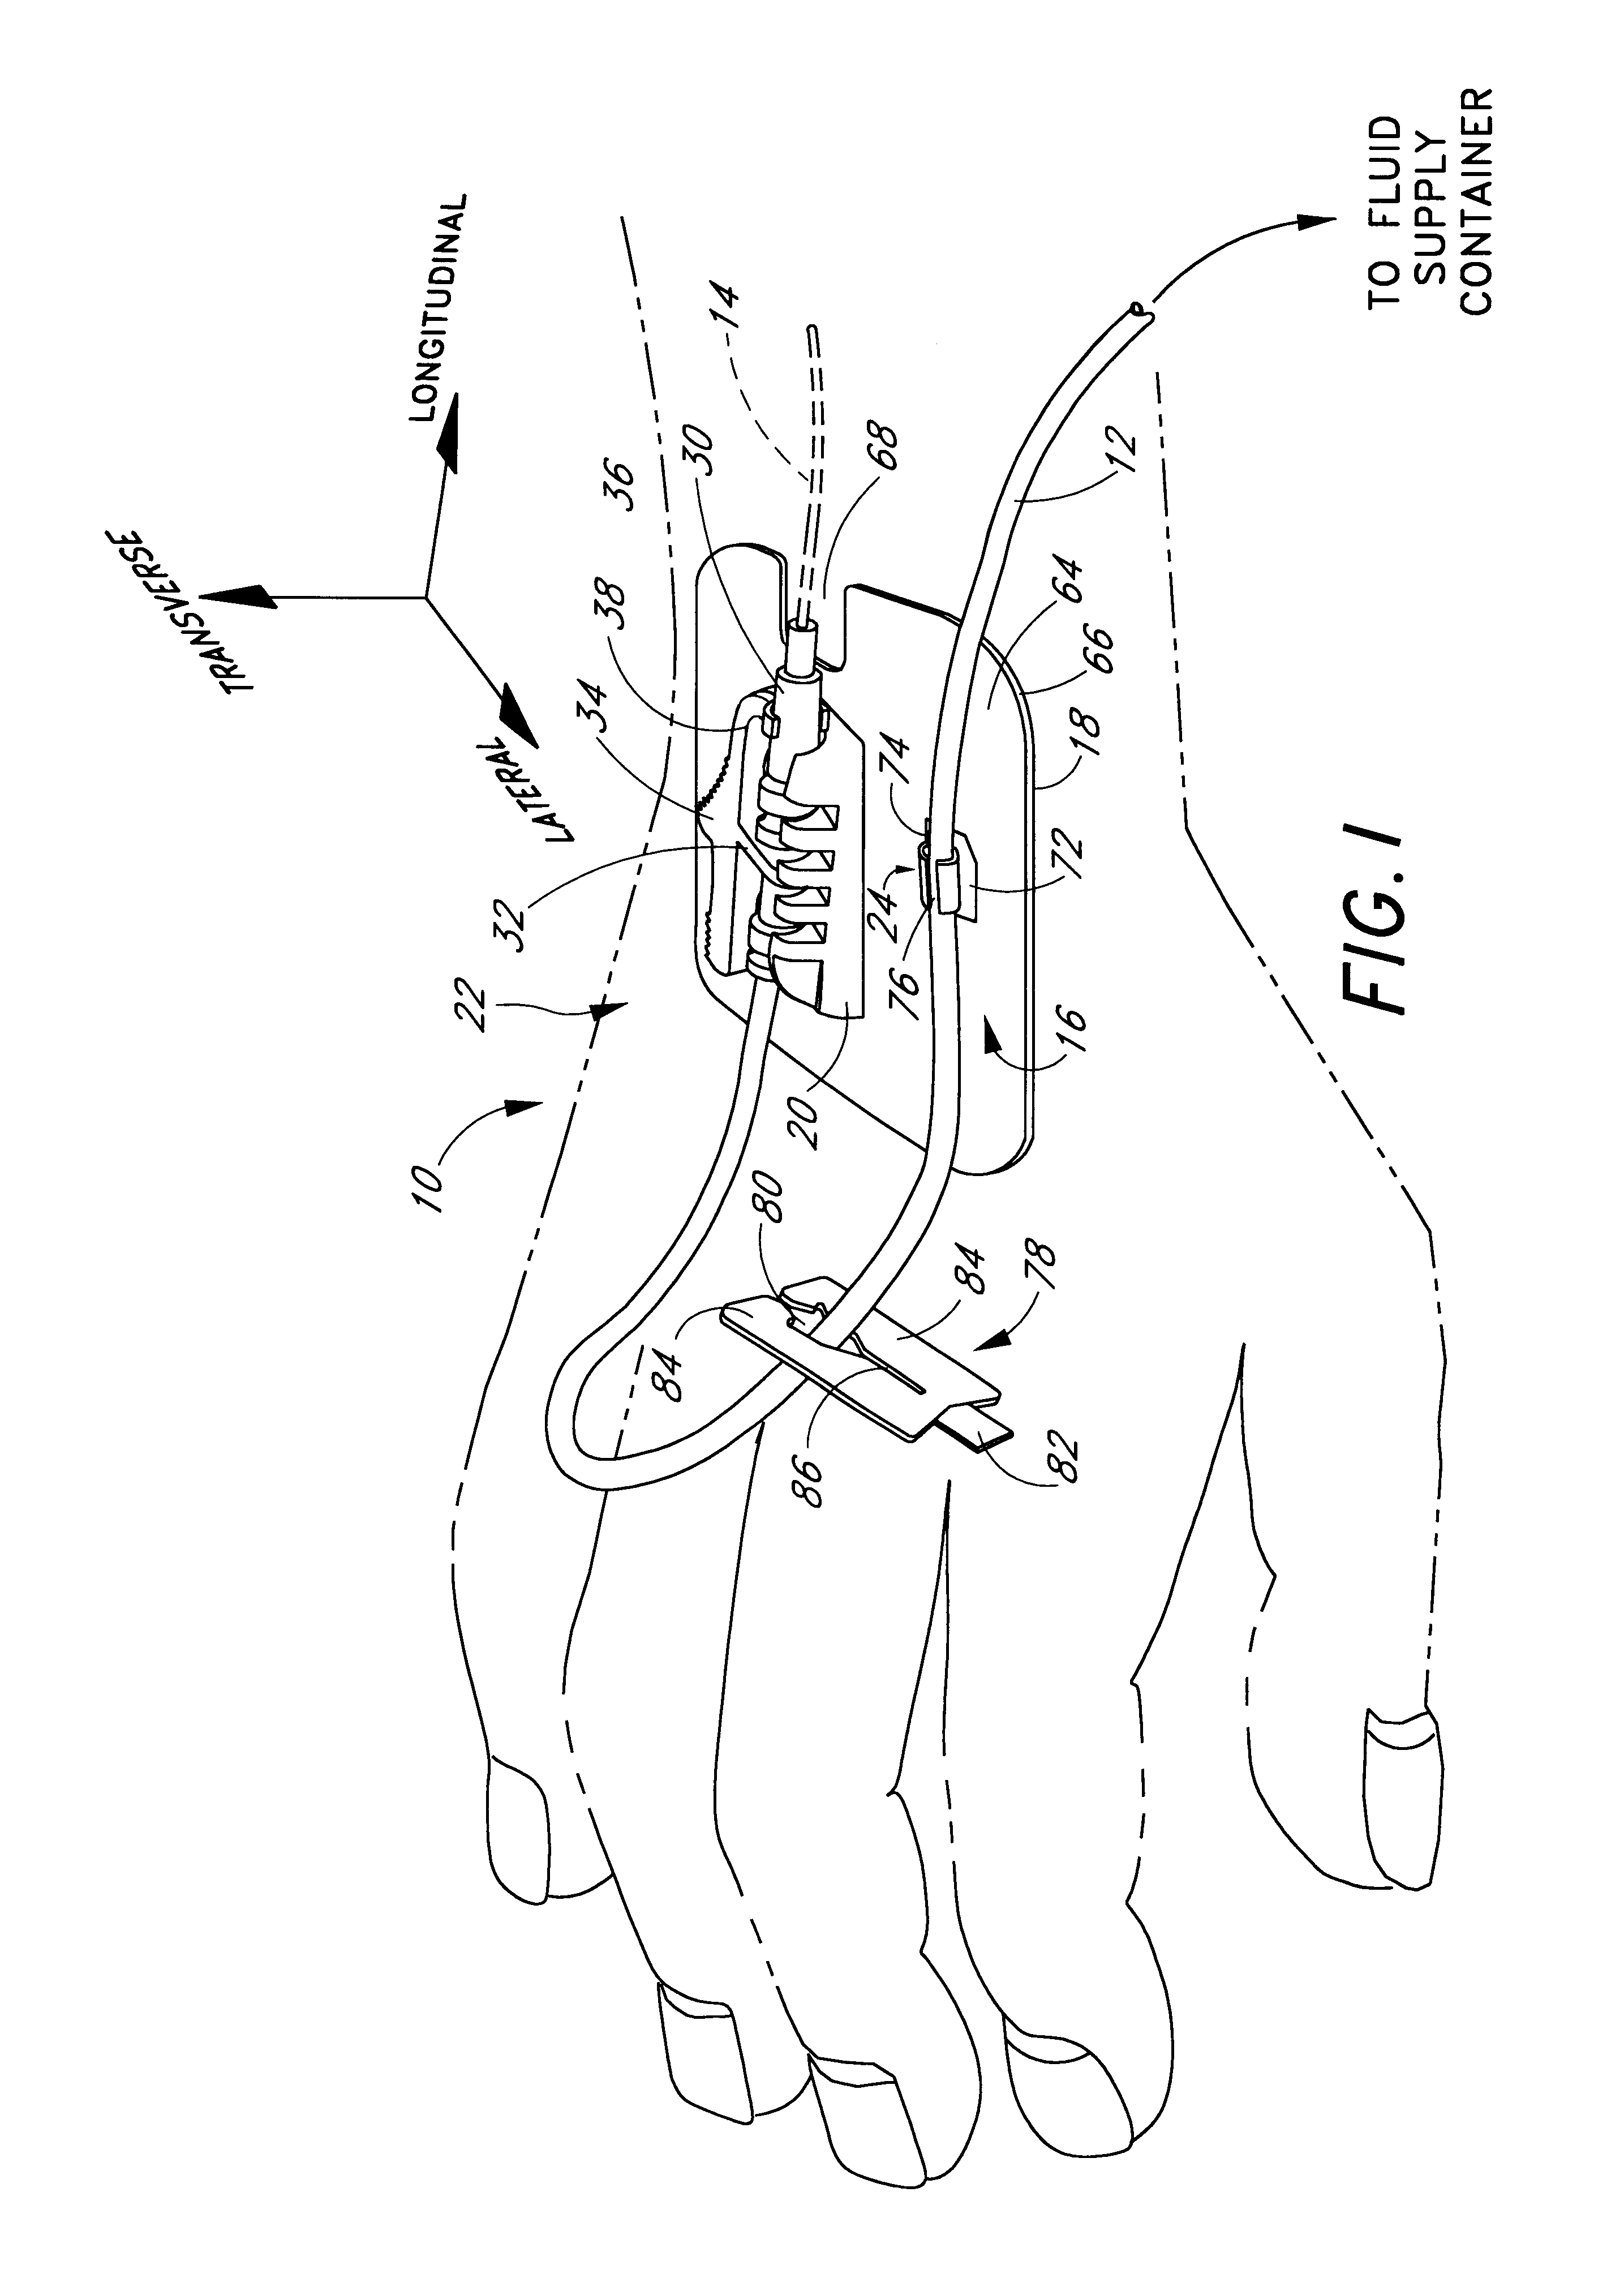 Catheter anchoring system